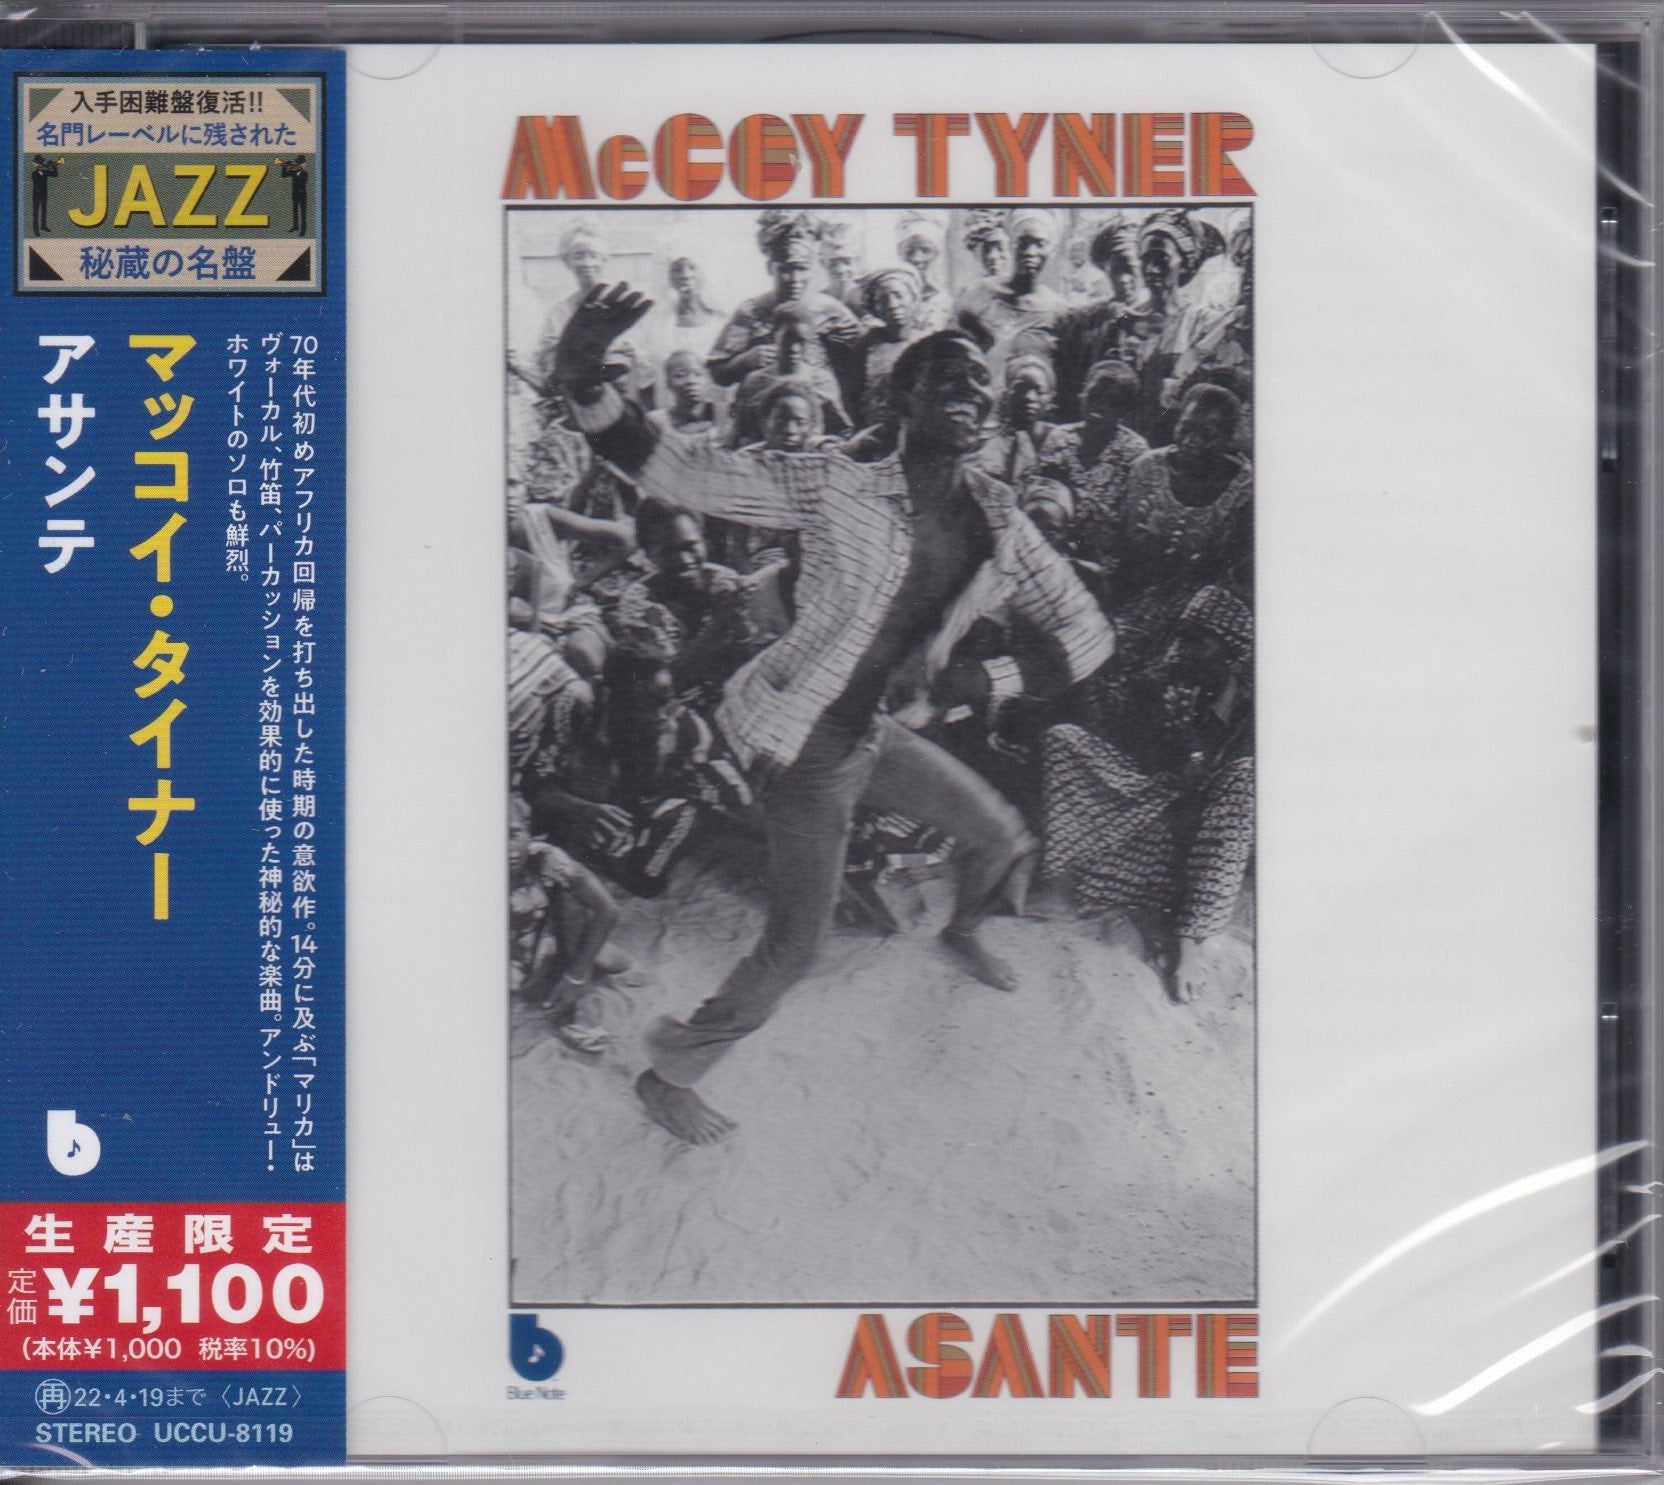 McCoy Tyner ‎– Asante